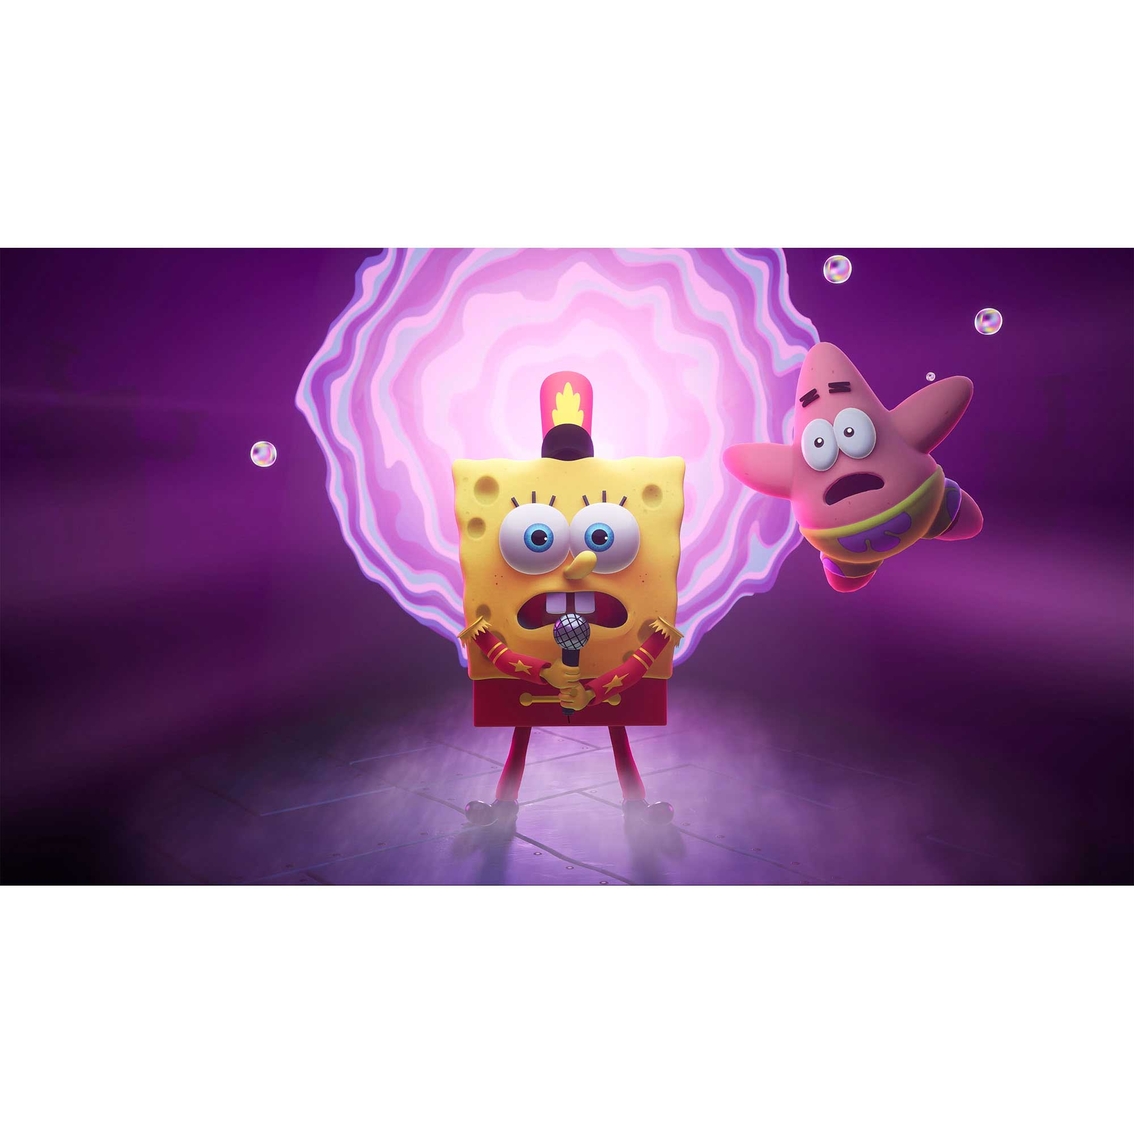 SpongeBob SquarePants: The Cosmic Shake (Xbox One) - Image 2 of 10